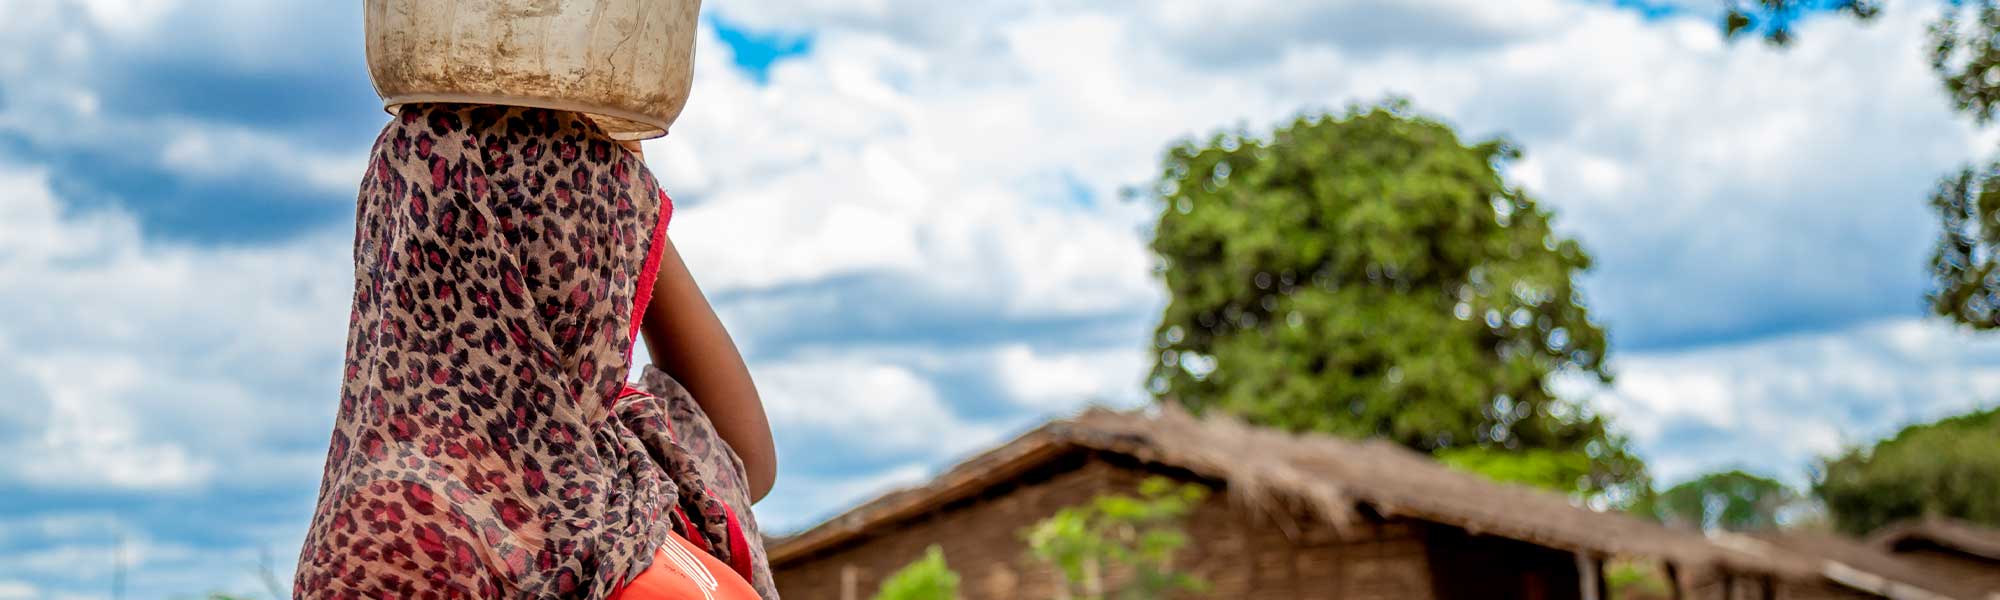 Tima fra Mosambik er 14 år, og gravid